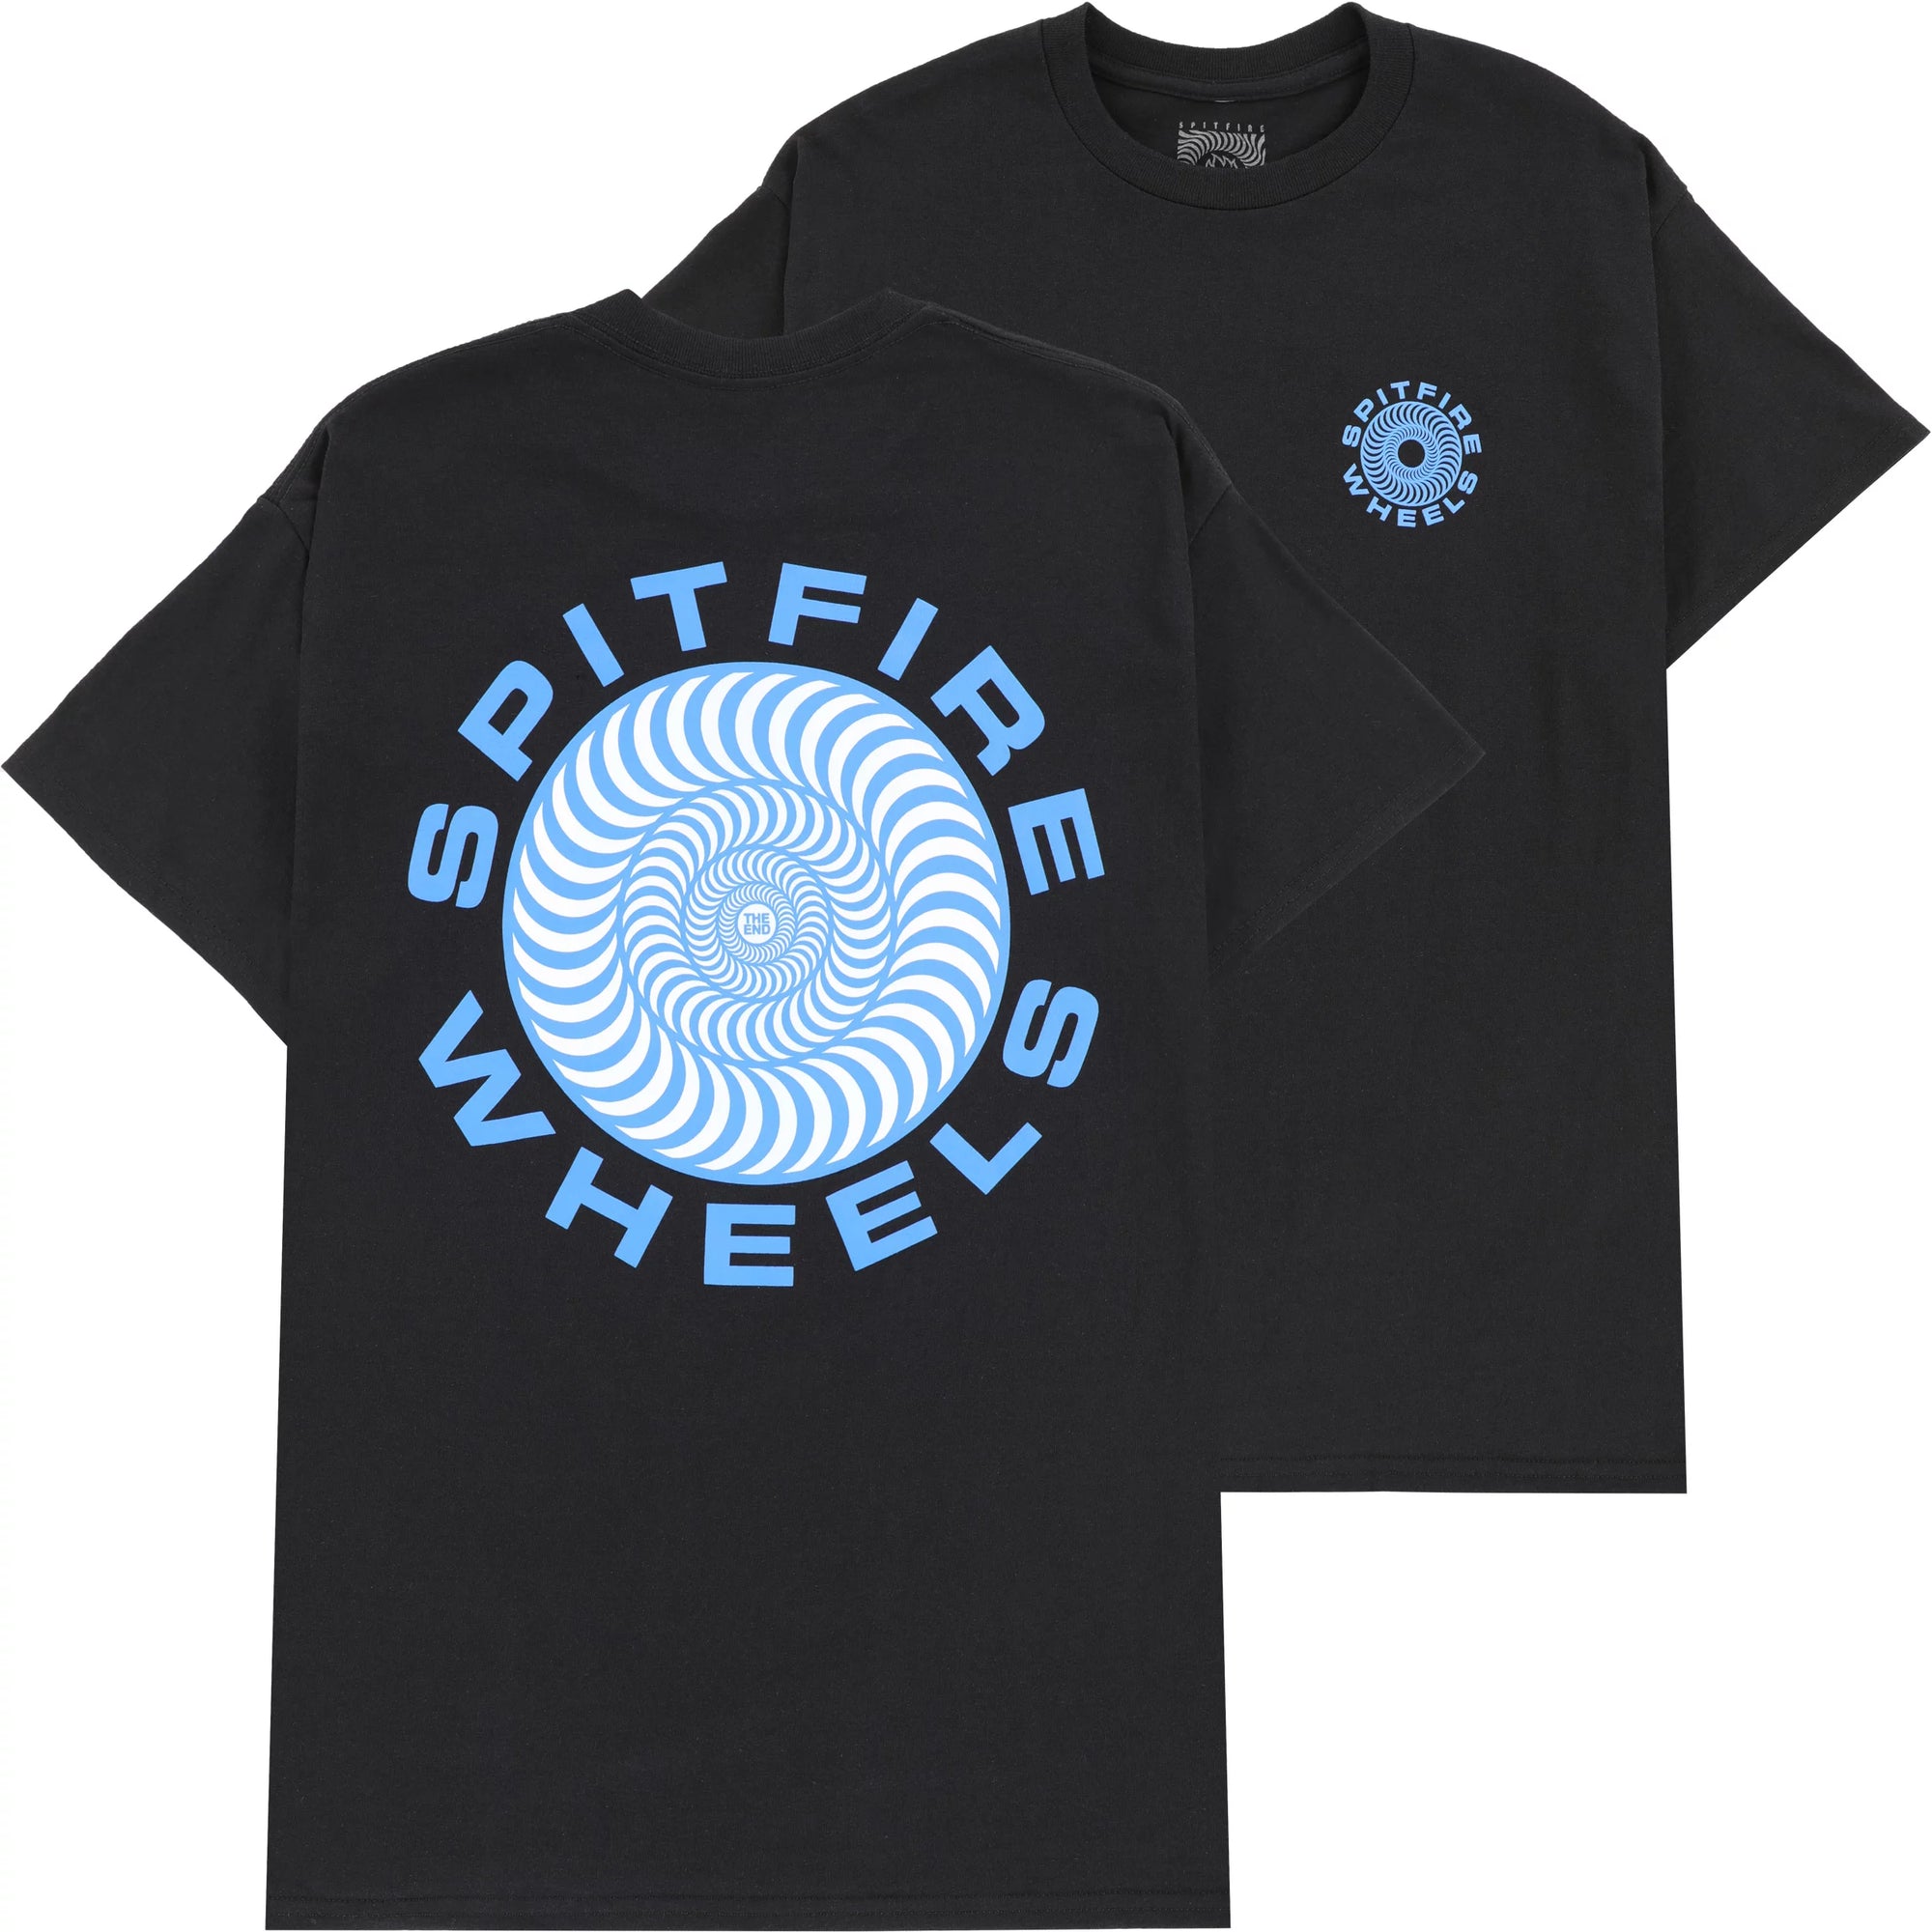 SPITFIRE CLASSIC '87 SWIRL FILL T-SHIRT BLACK/BLUE - The Drive Skateshop